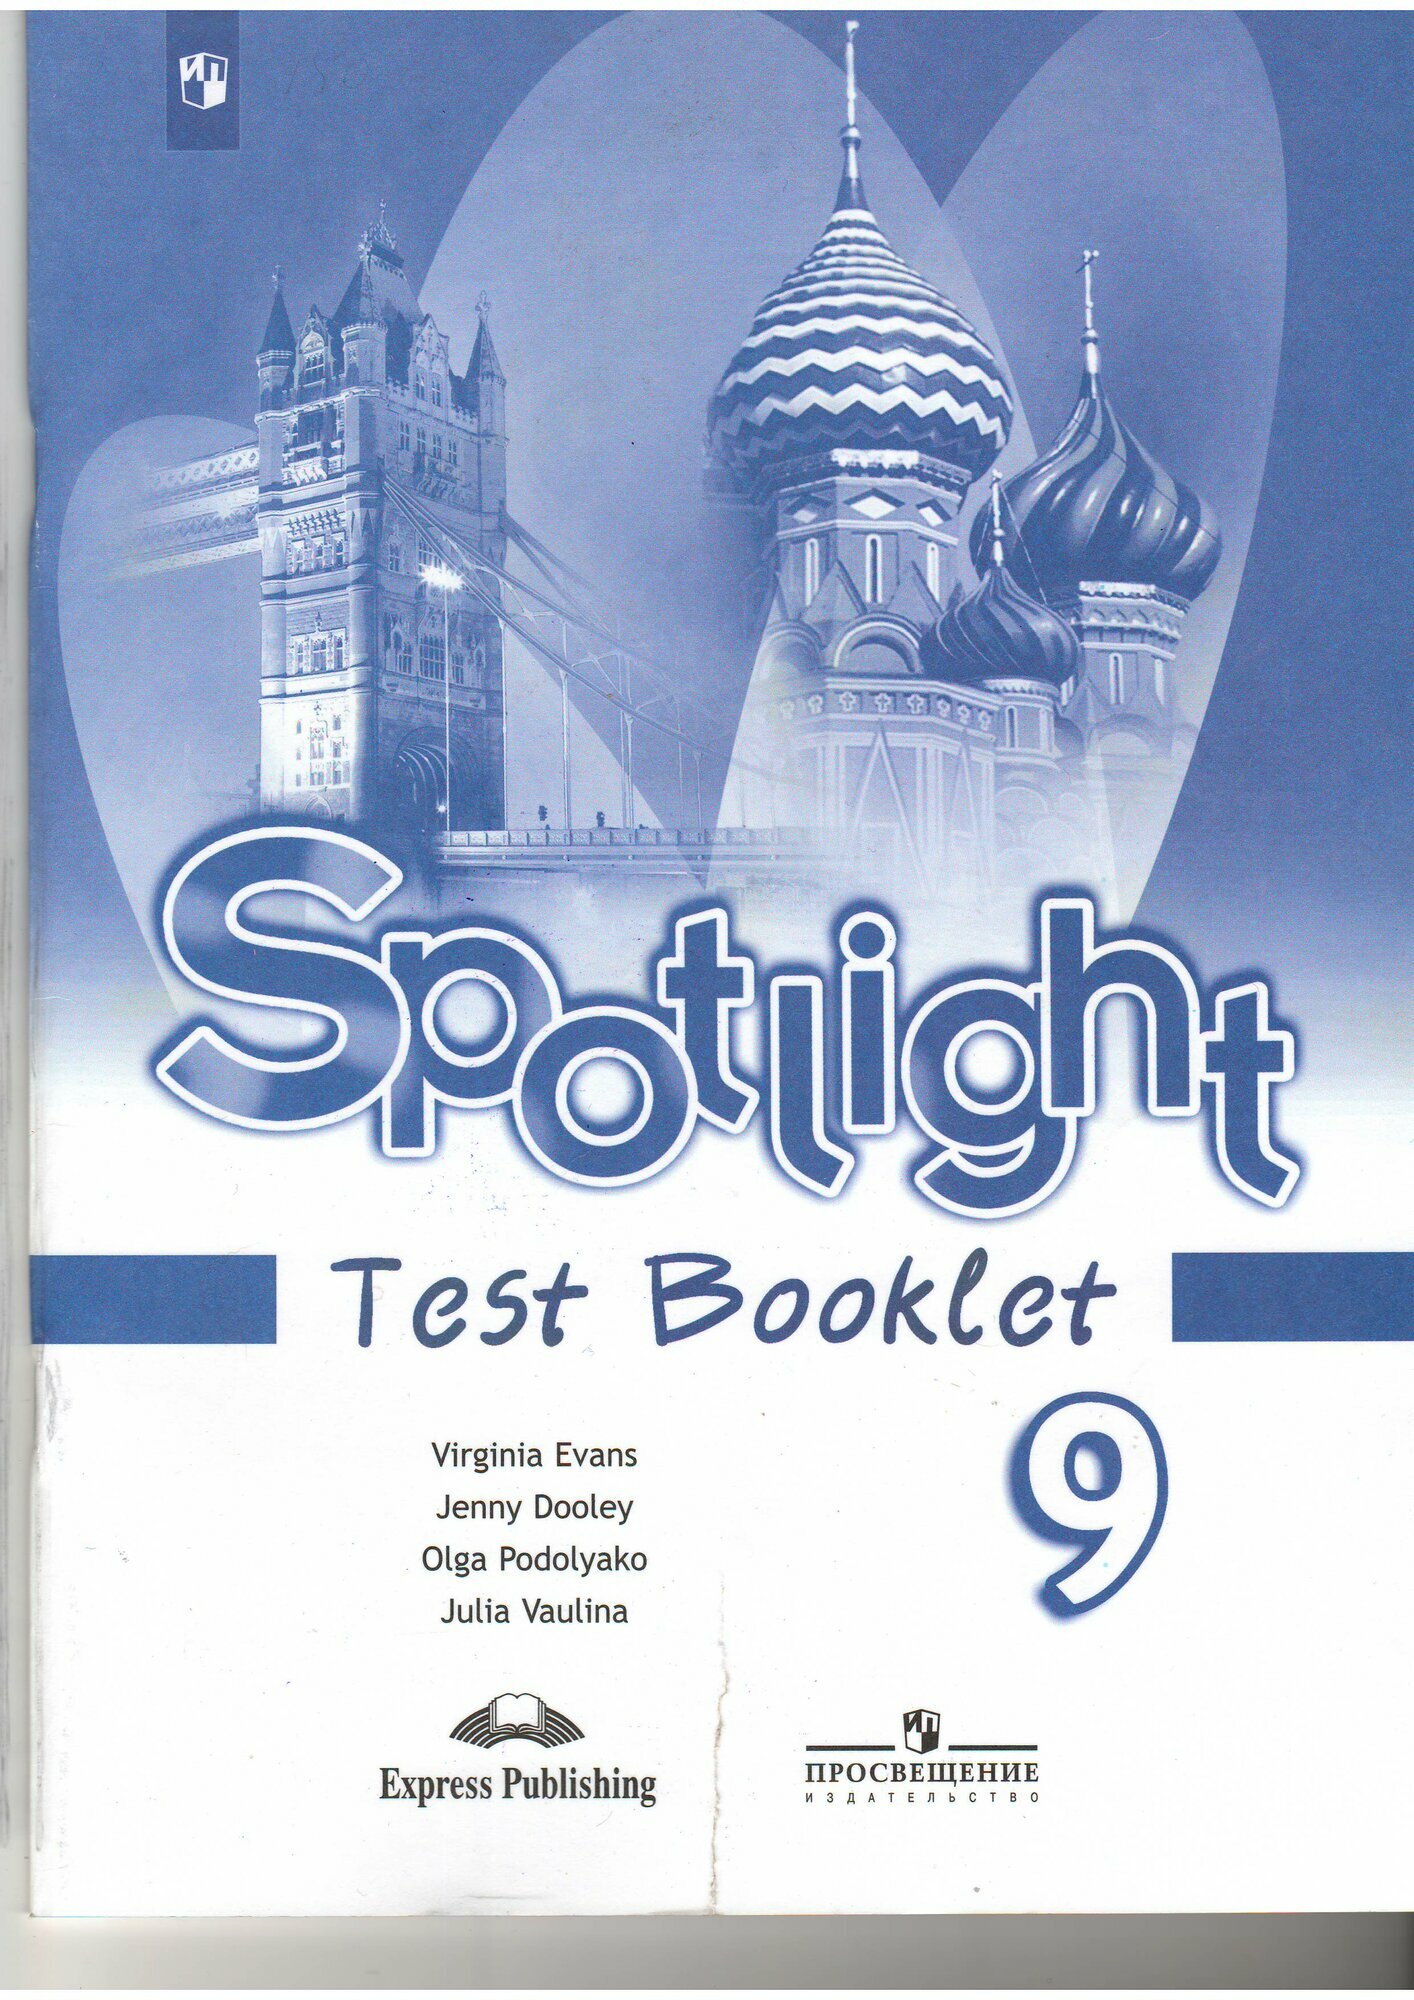 Дули Дж, Ваулина Ю. Е, Подоляко О. Е, Эванс В. "Spotlight. Test Booklet 9 класс" офсетная